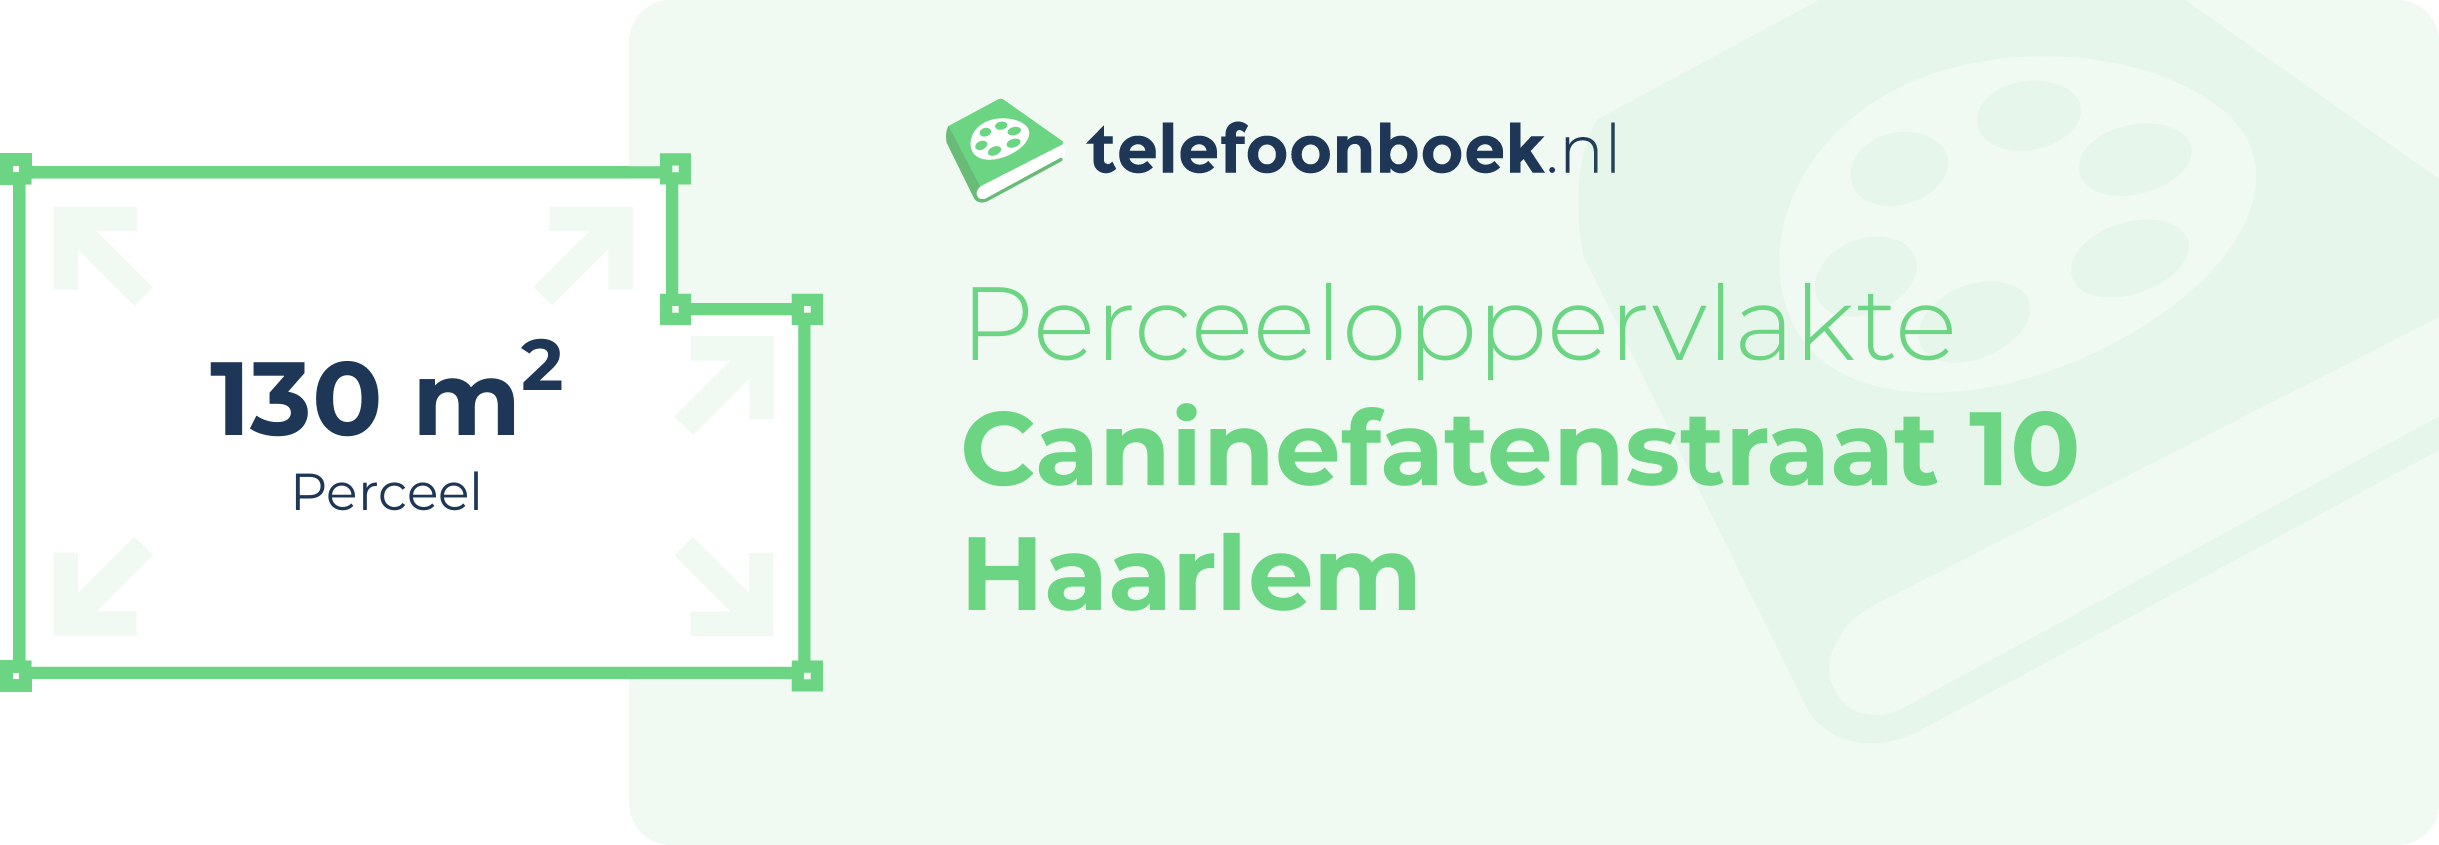 Perceeloppervlakte Caninefatenstraat 10 Haarlem